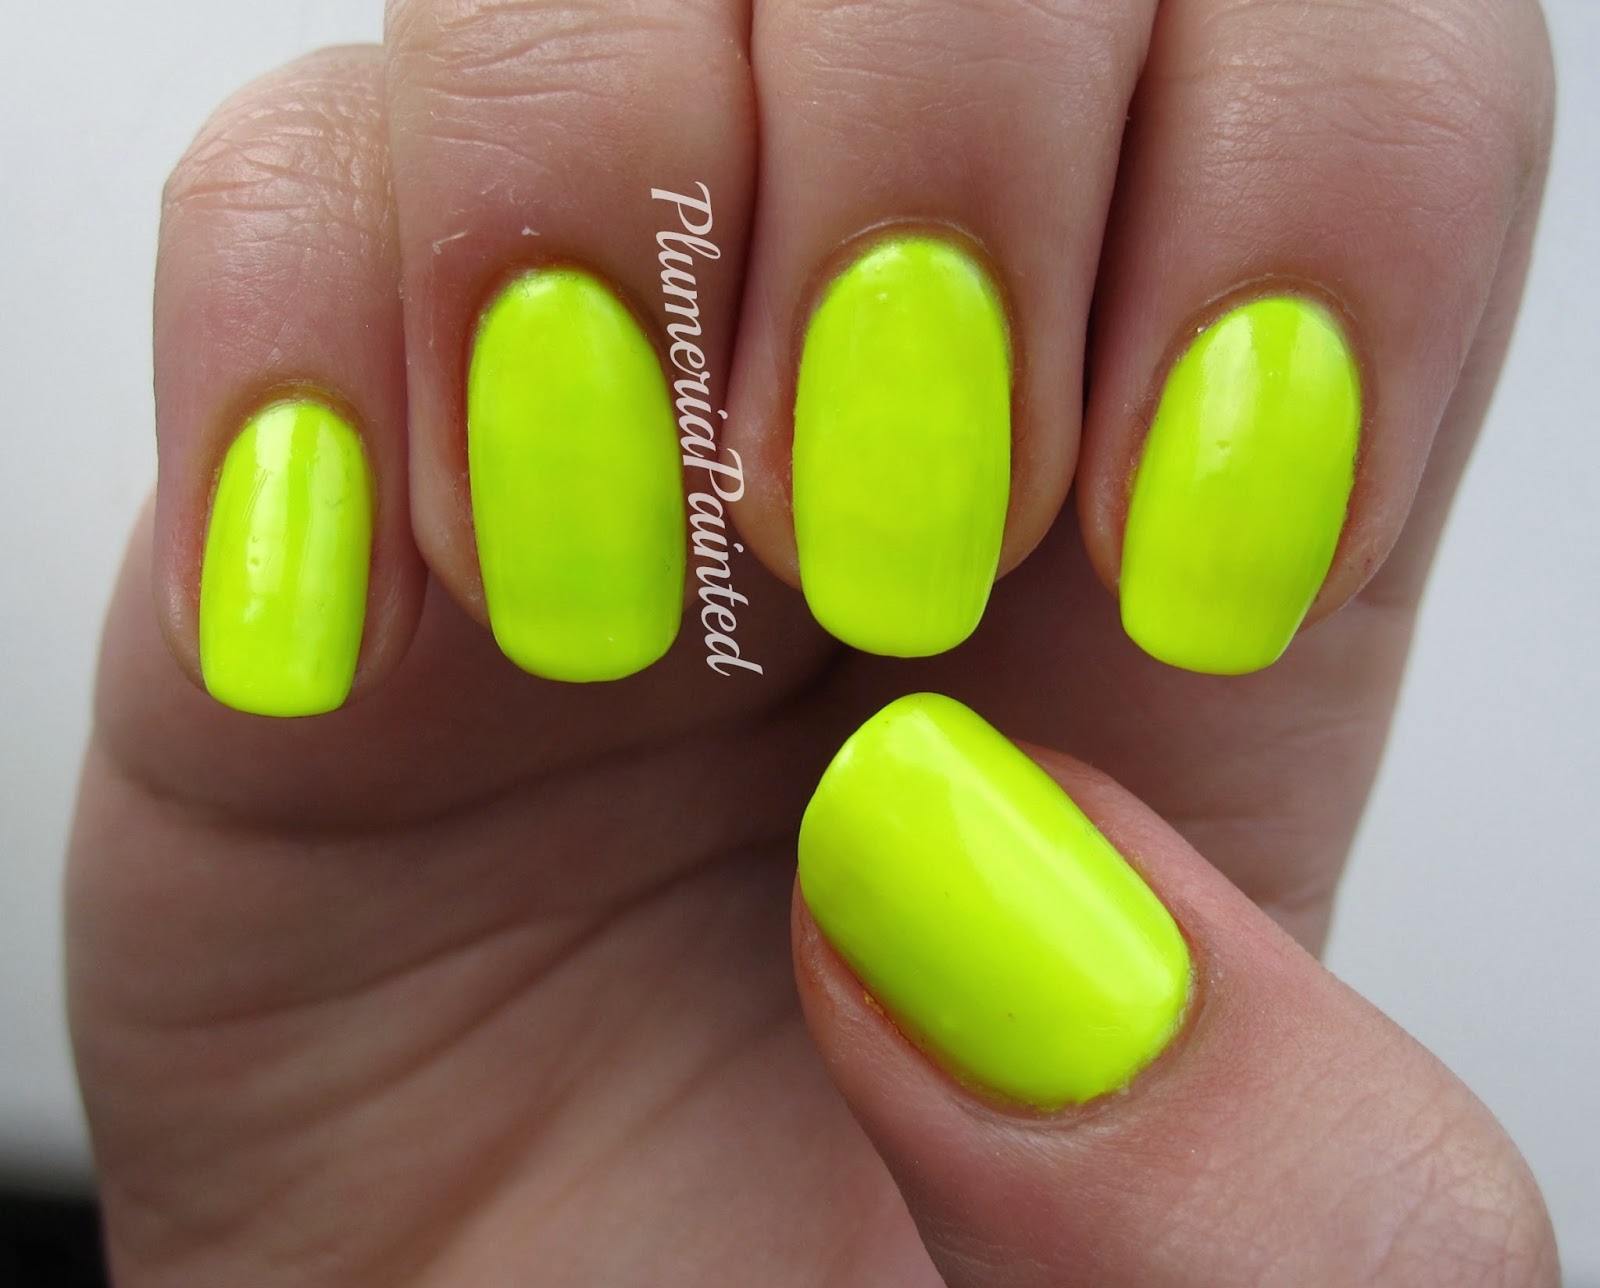 10. "Lemonade Yellow" nail polish color - wide 3